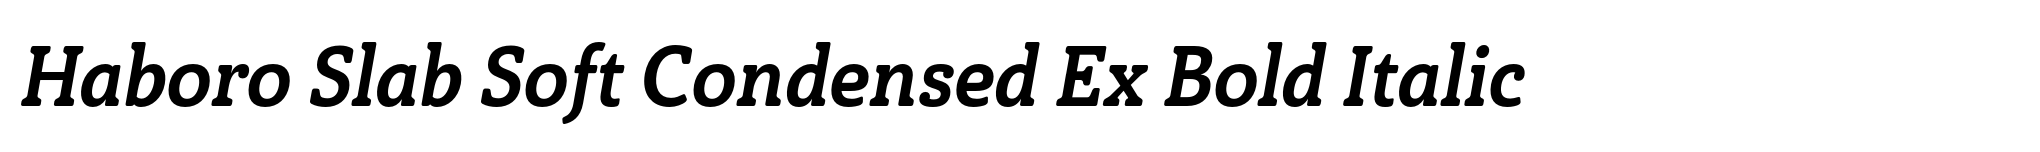 Haboro Slab Soft Condensed Ex Bold Italic image